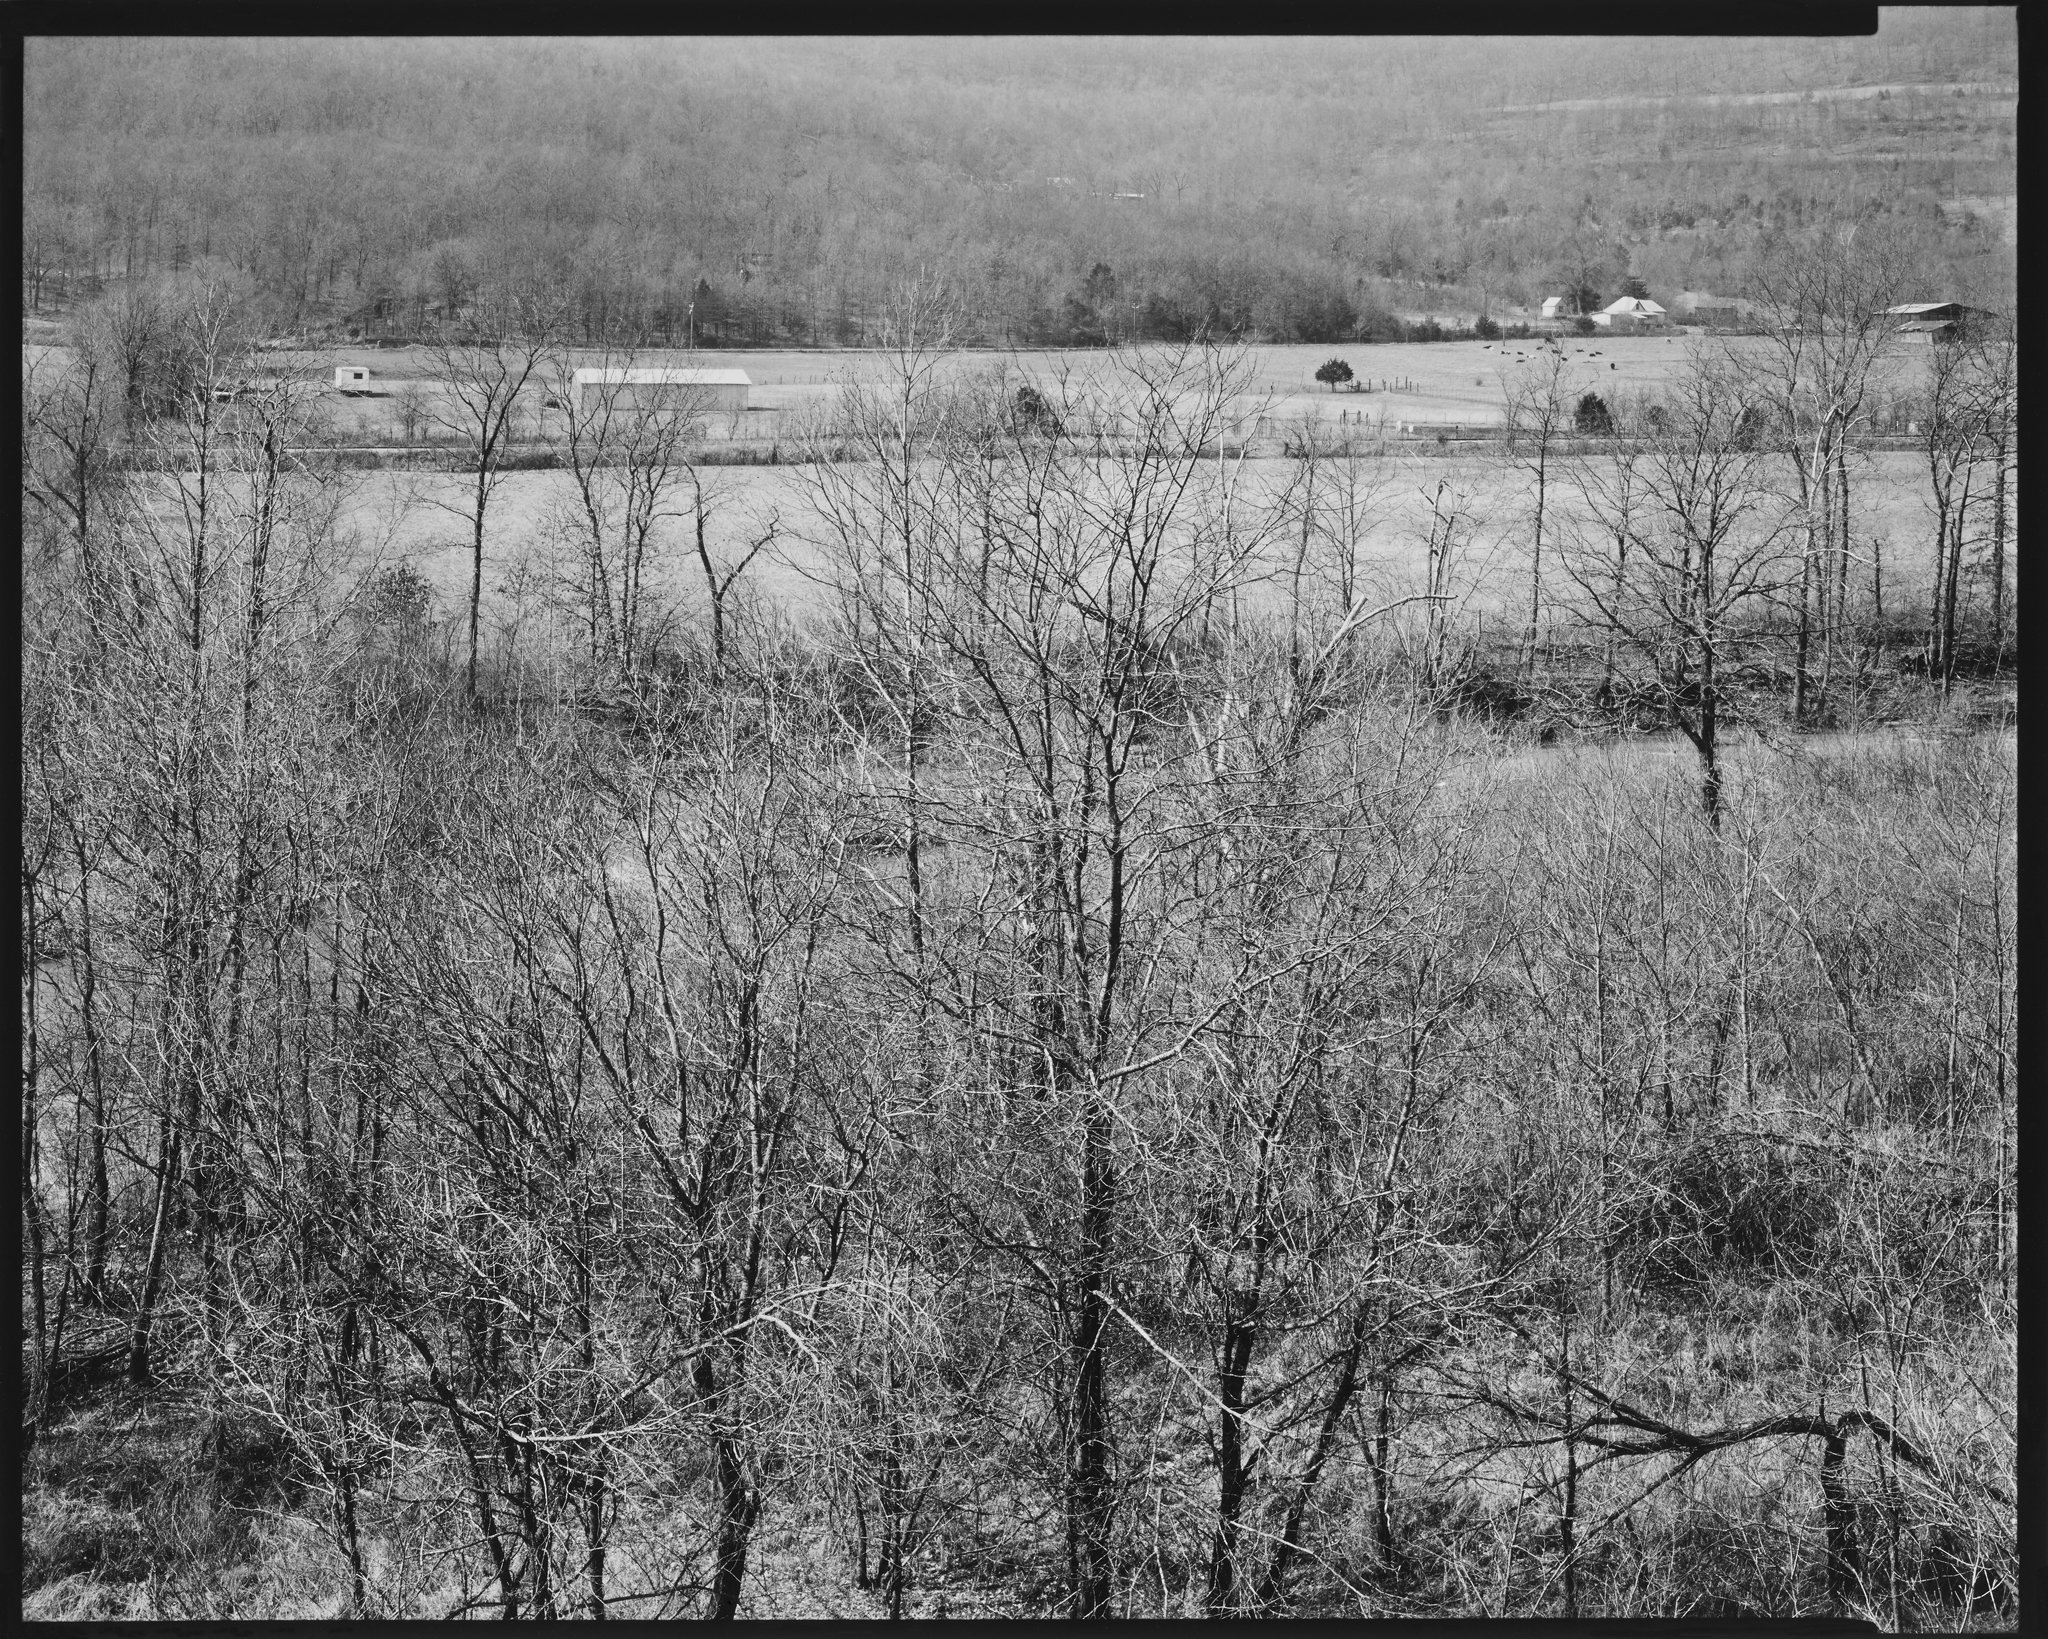 American Landscapes Portfolio_Ozark River Valley, Arkansas_1981 © Nick Merrick.jpg